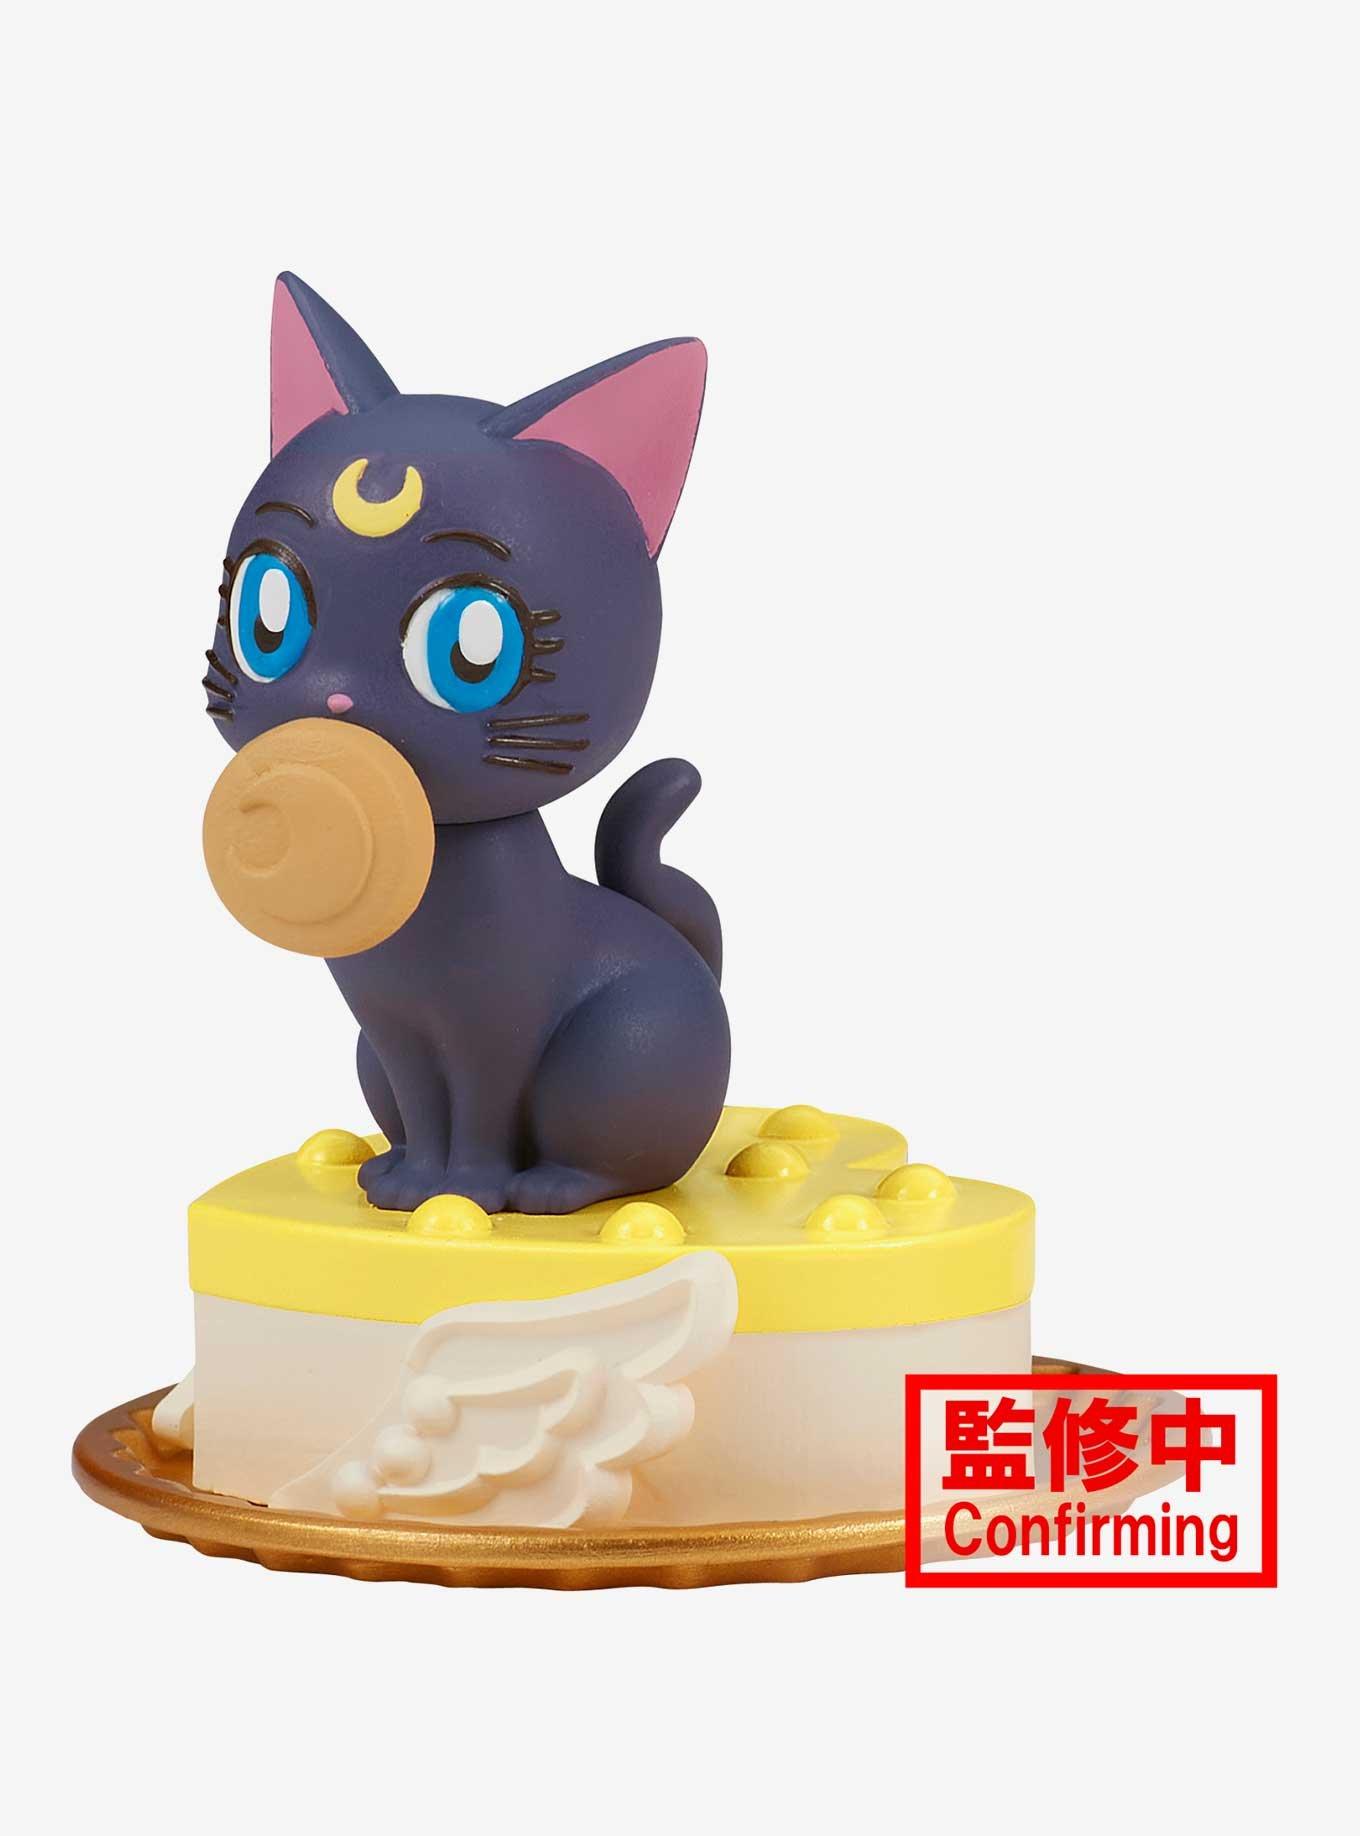 Luna Bunny Moon Tumbler Luna Kawaii Anime Gift Personalized 